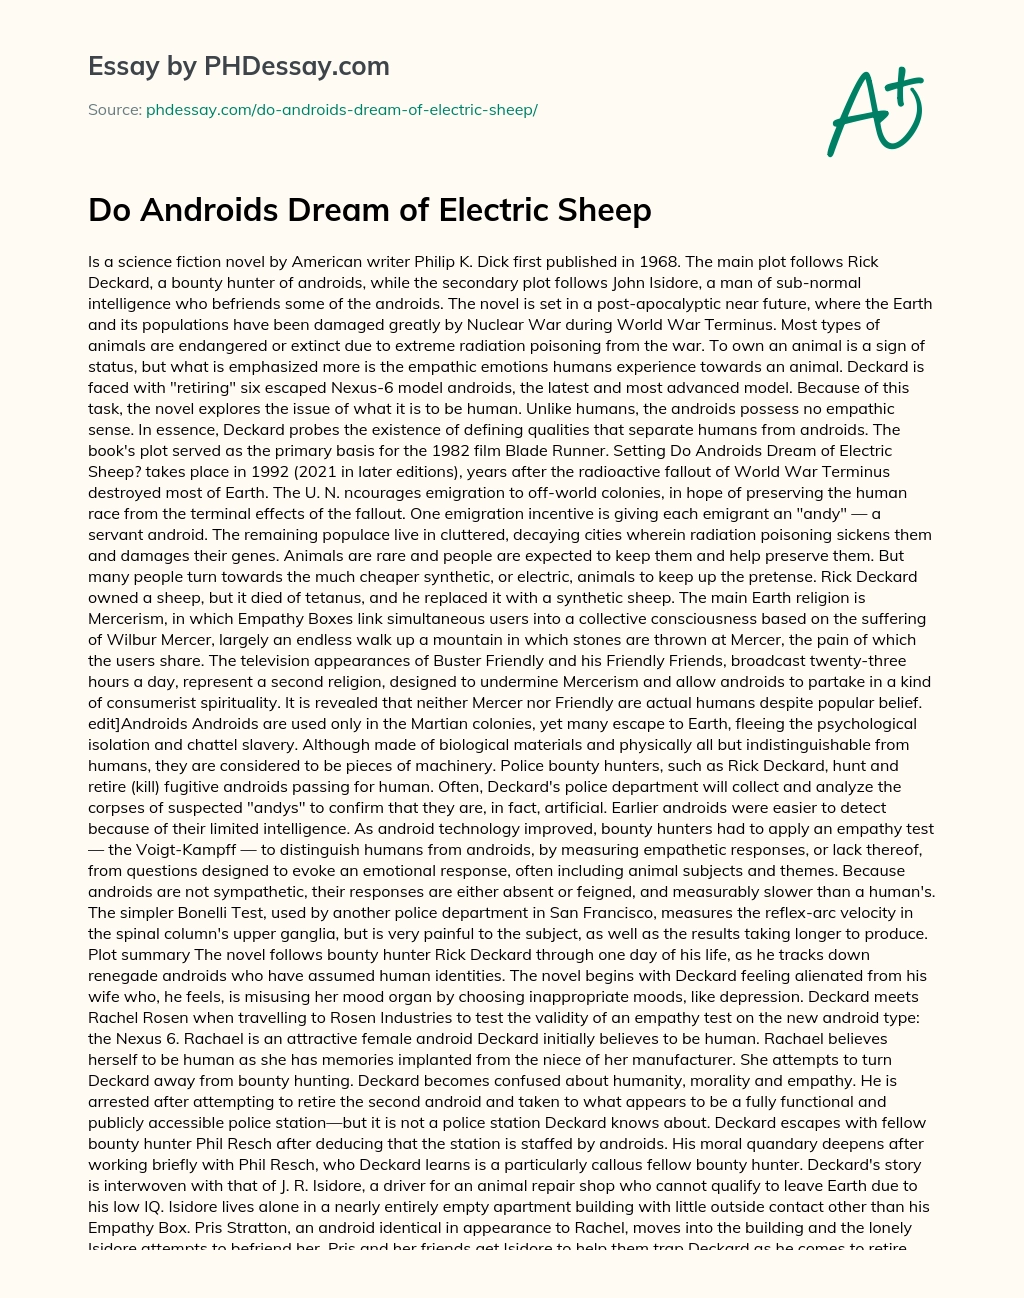 Do Androids Dream of Electric Sheep essay